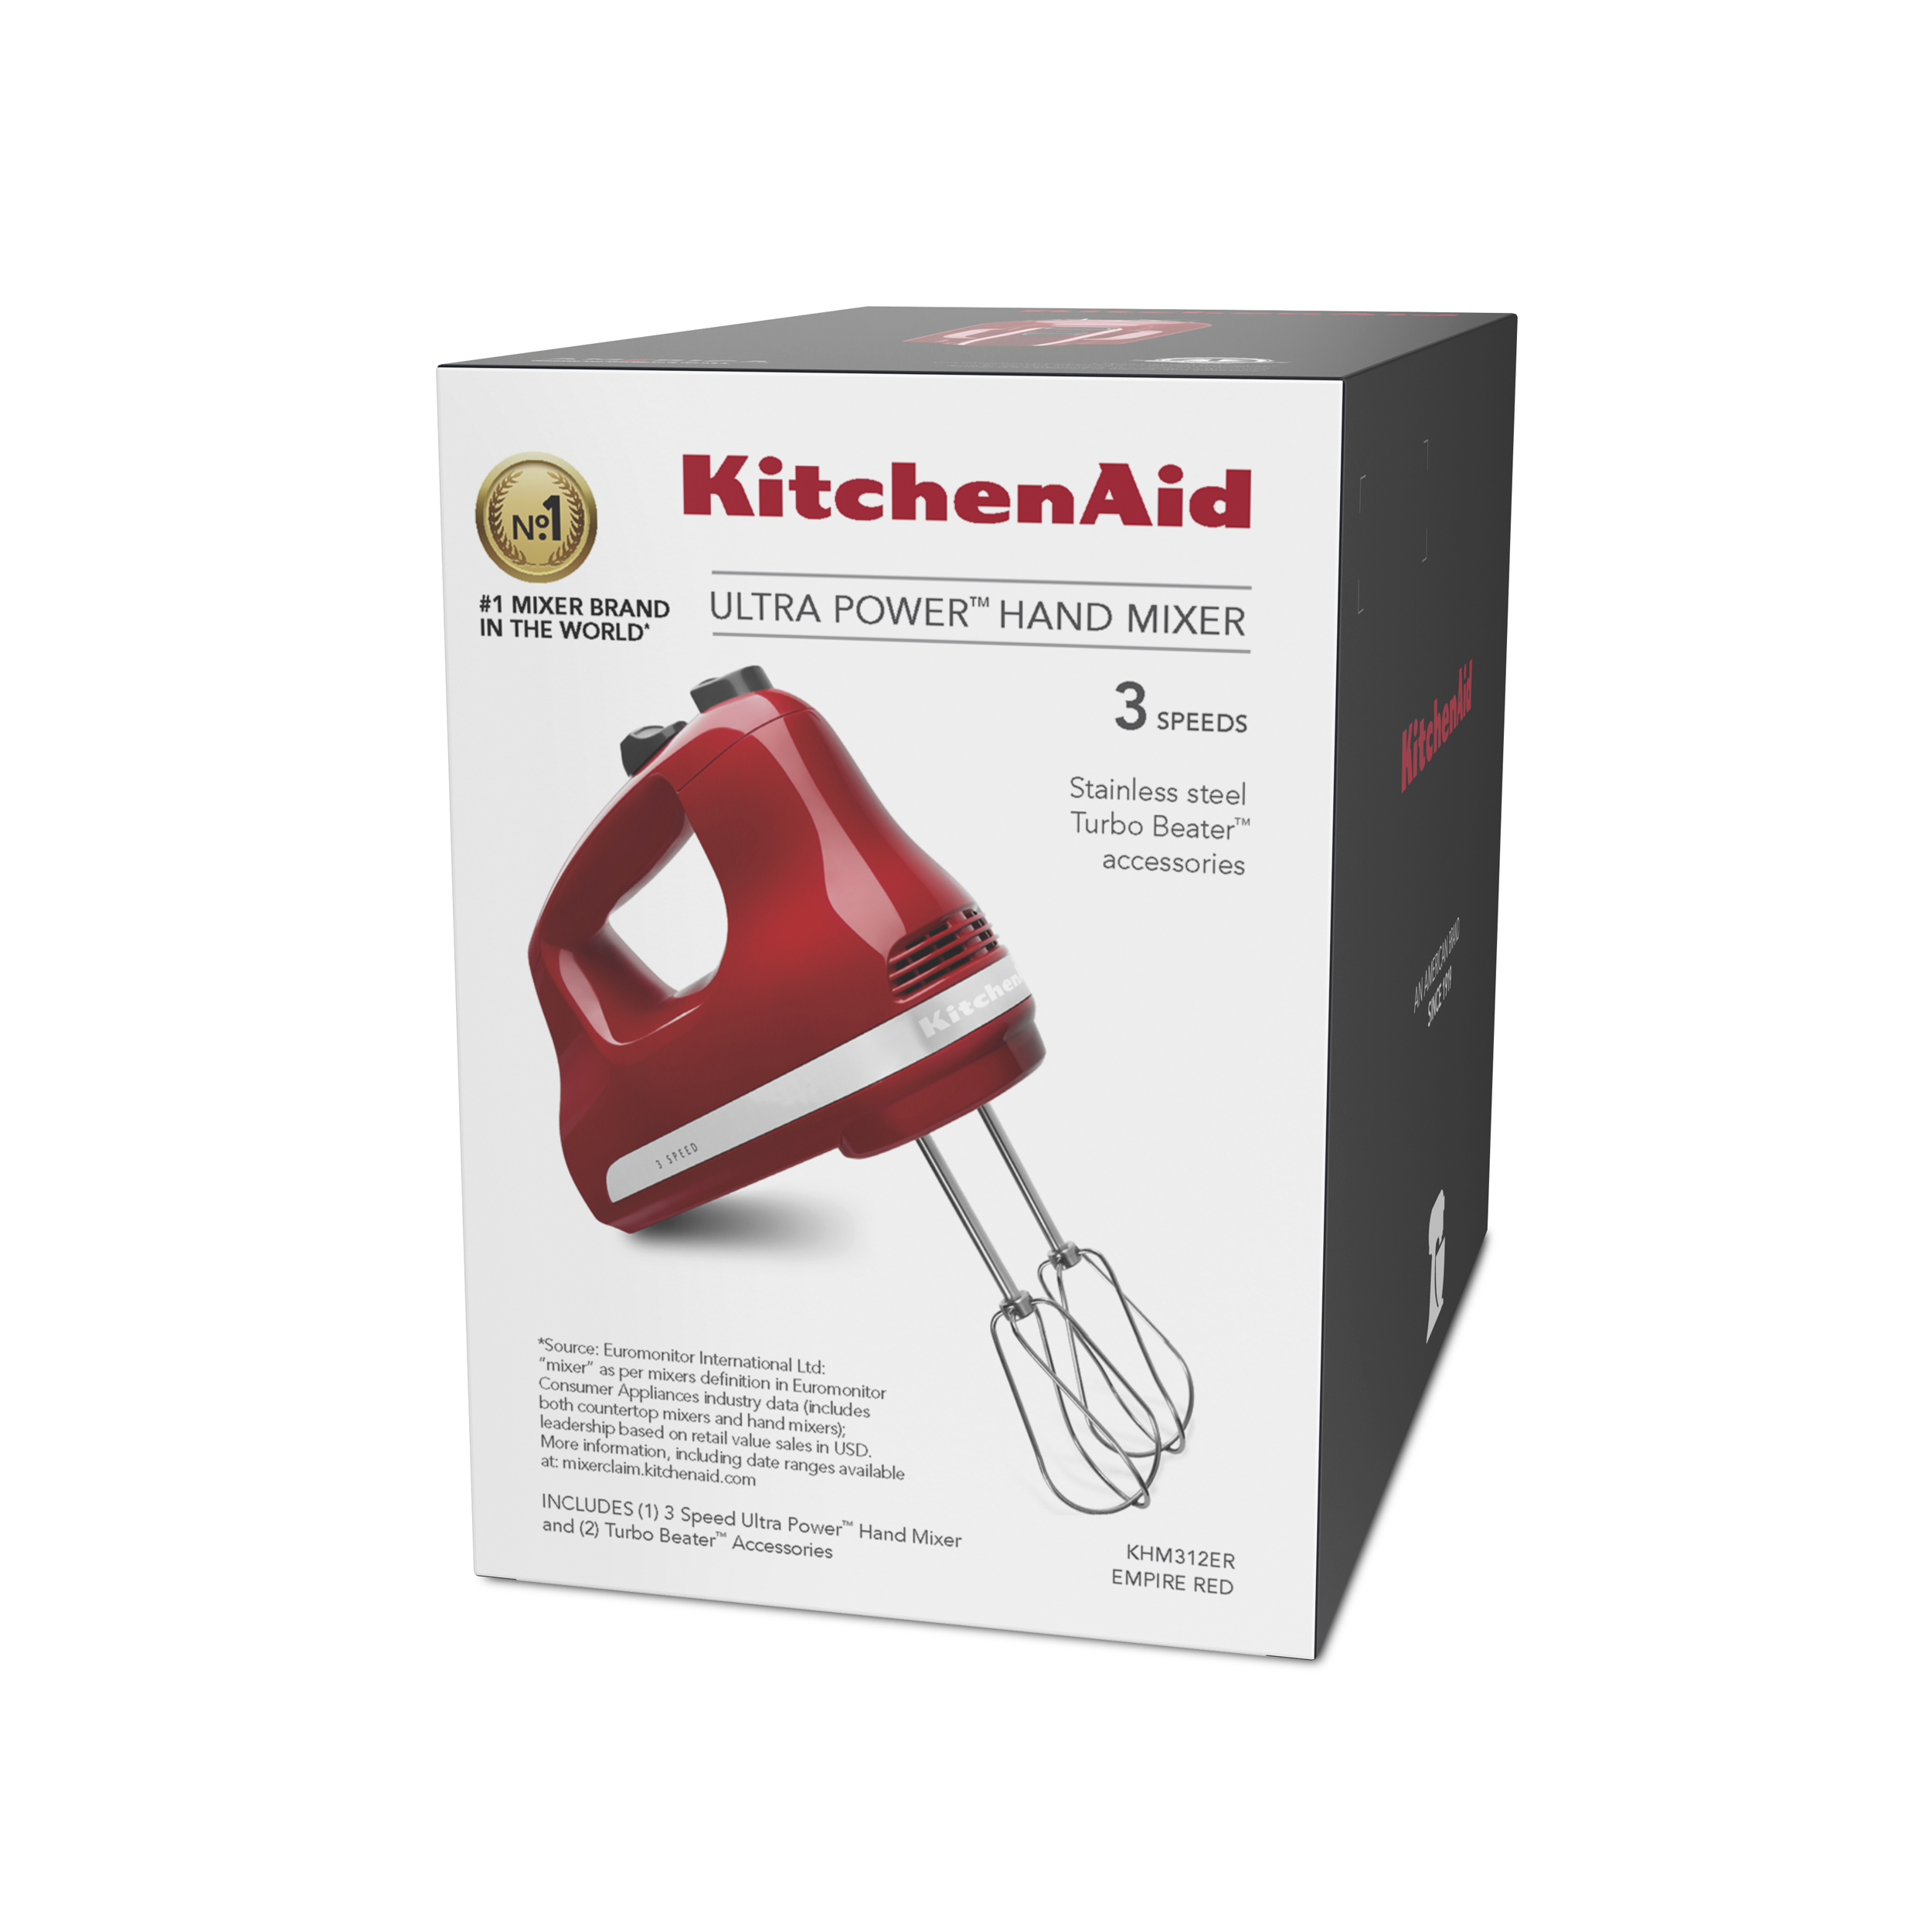 KitchenAid 3 Speed Hand Mixer, Empire Red, KHM312 - image 6 of 6